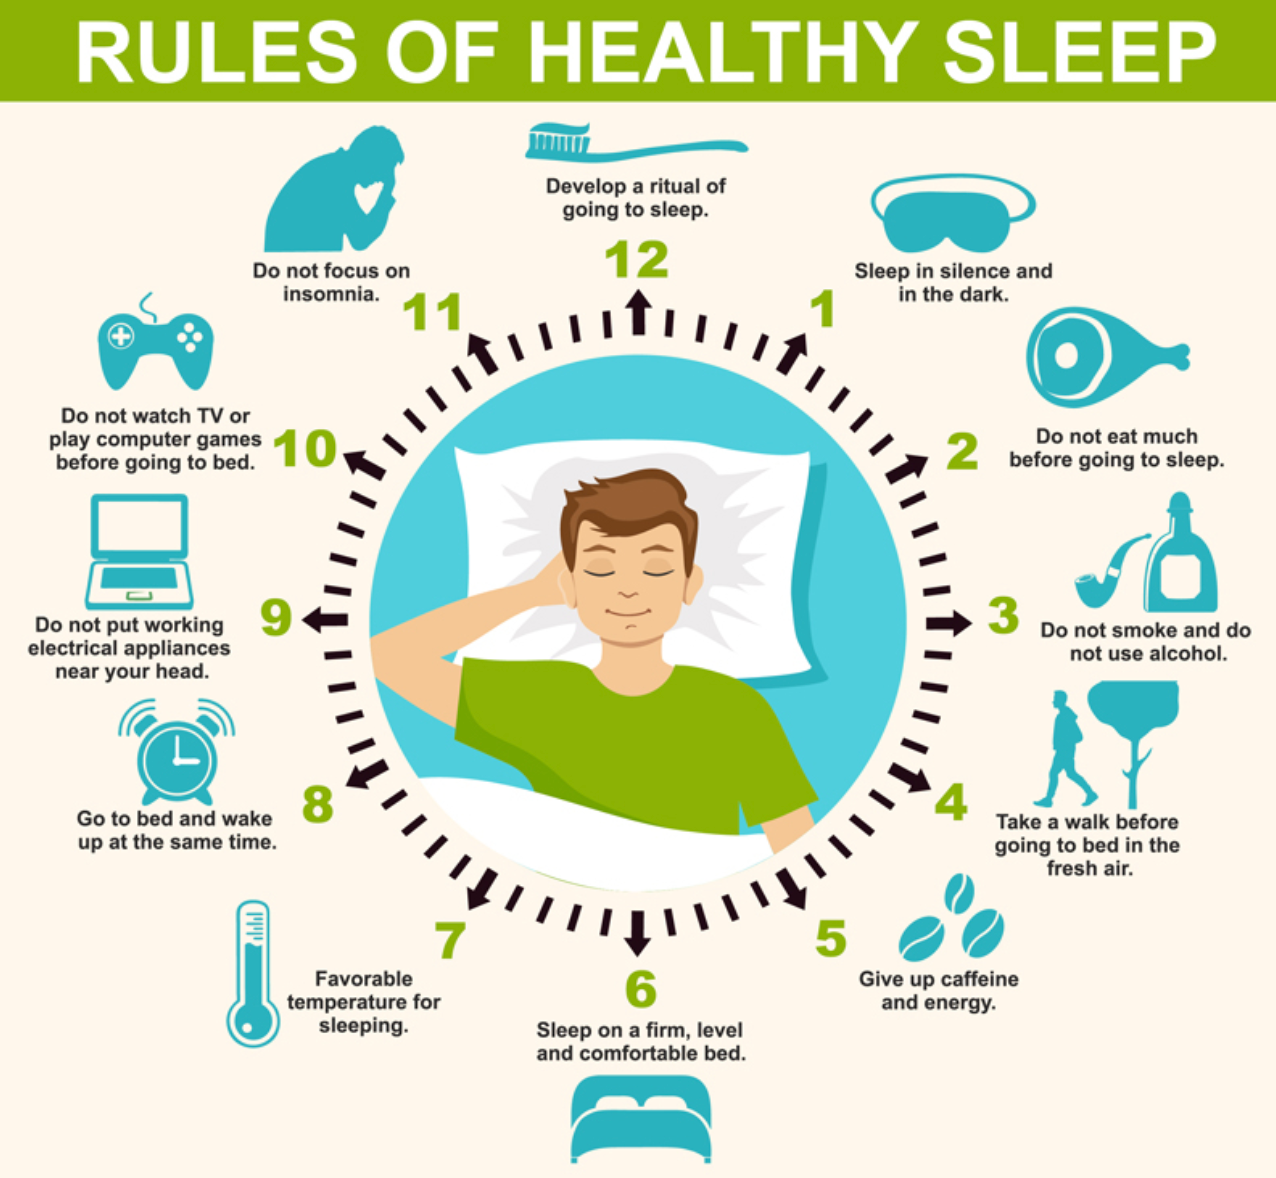 Sleep hygiene is important for getting a good night's sleep.